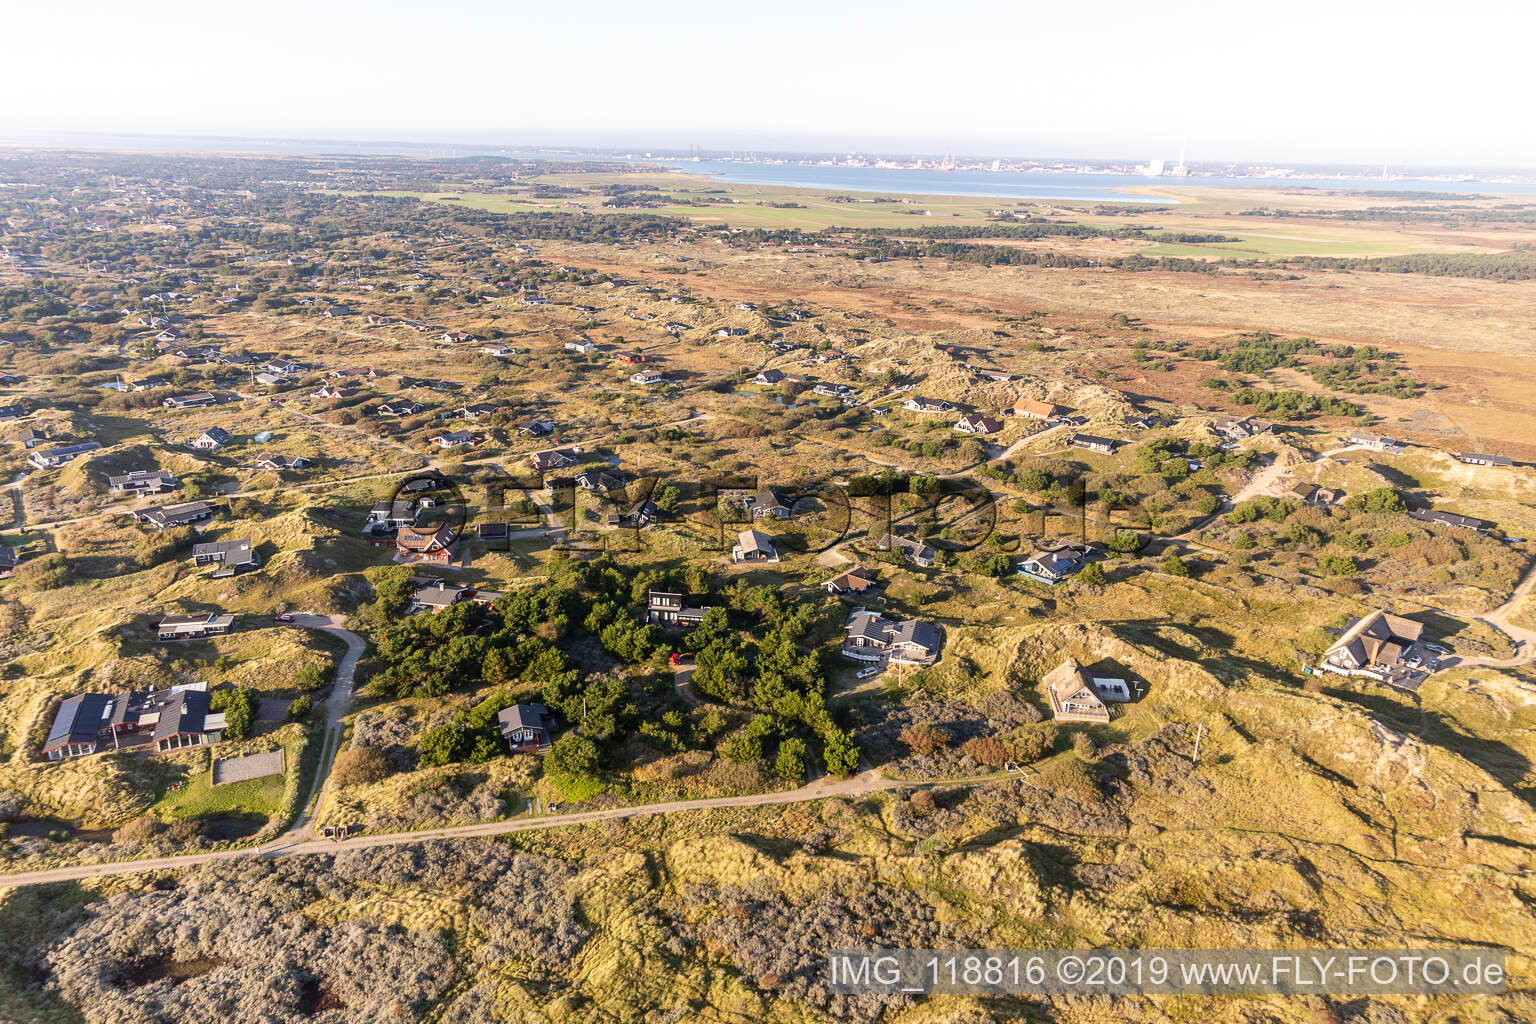 Luftbild von Hyggeligge Ferienhäuser in den Dünen in Fanø im Bundesland Syddanmark, Dänemark